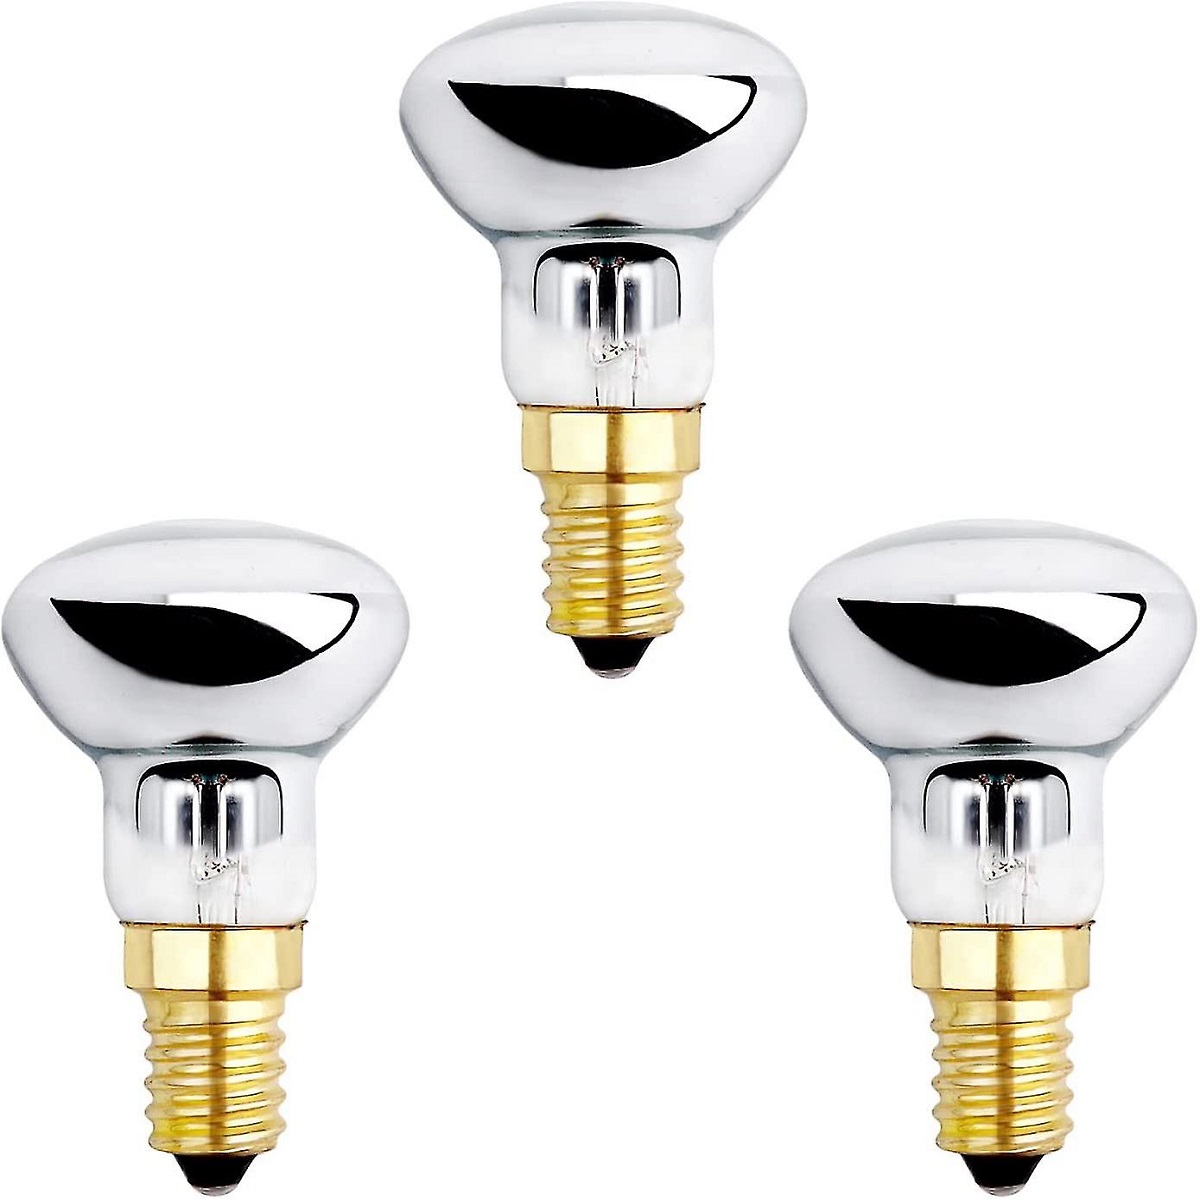 5015 15 Watt Light Bulb 2 Pack - Lava® Lamp